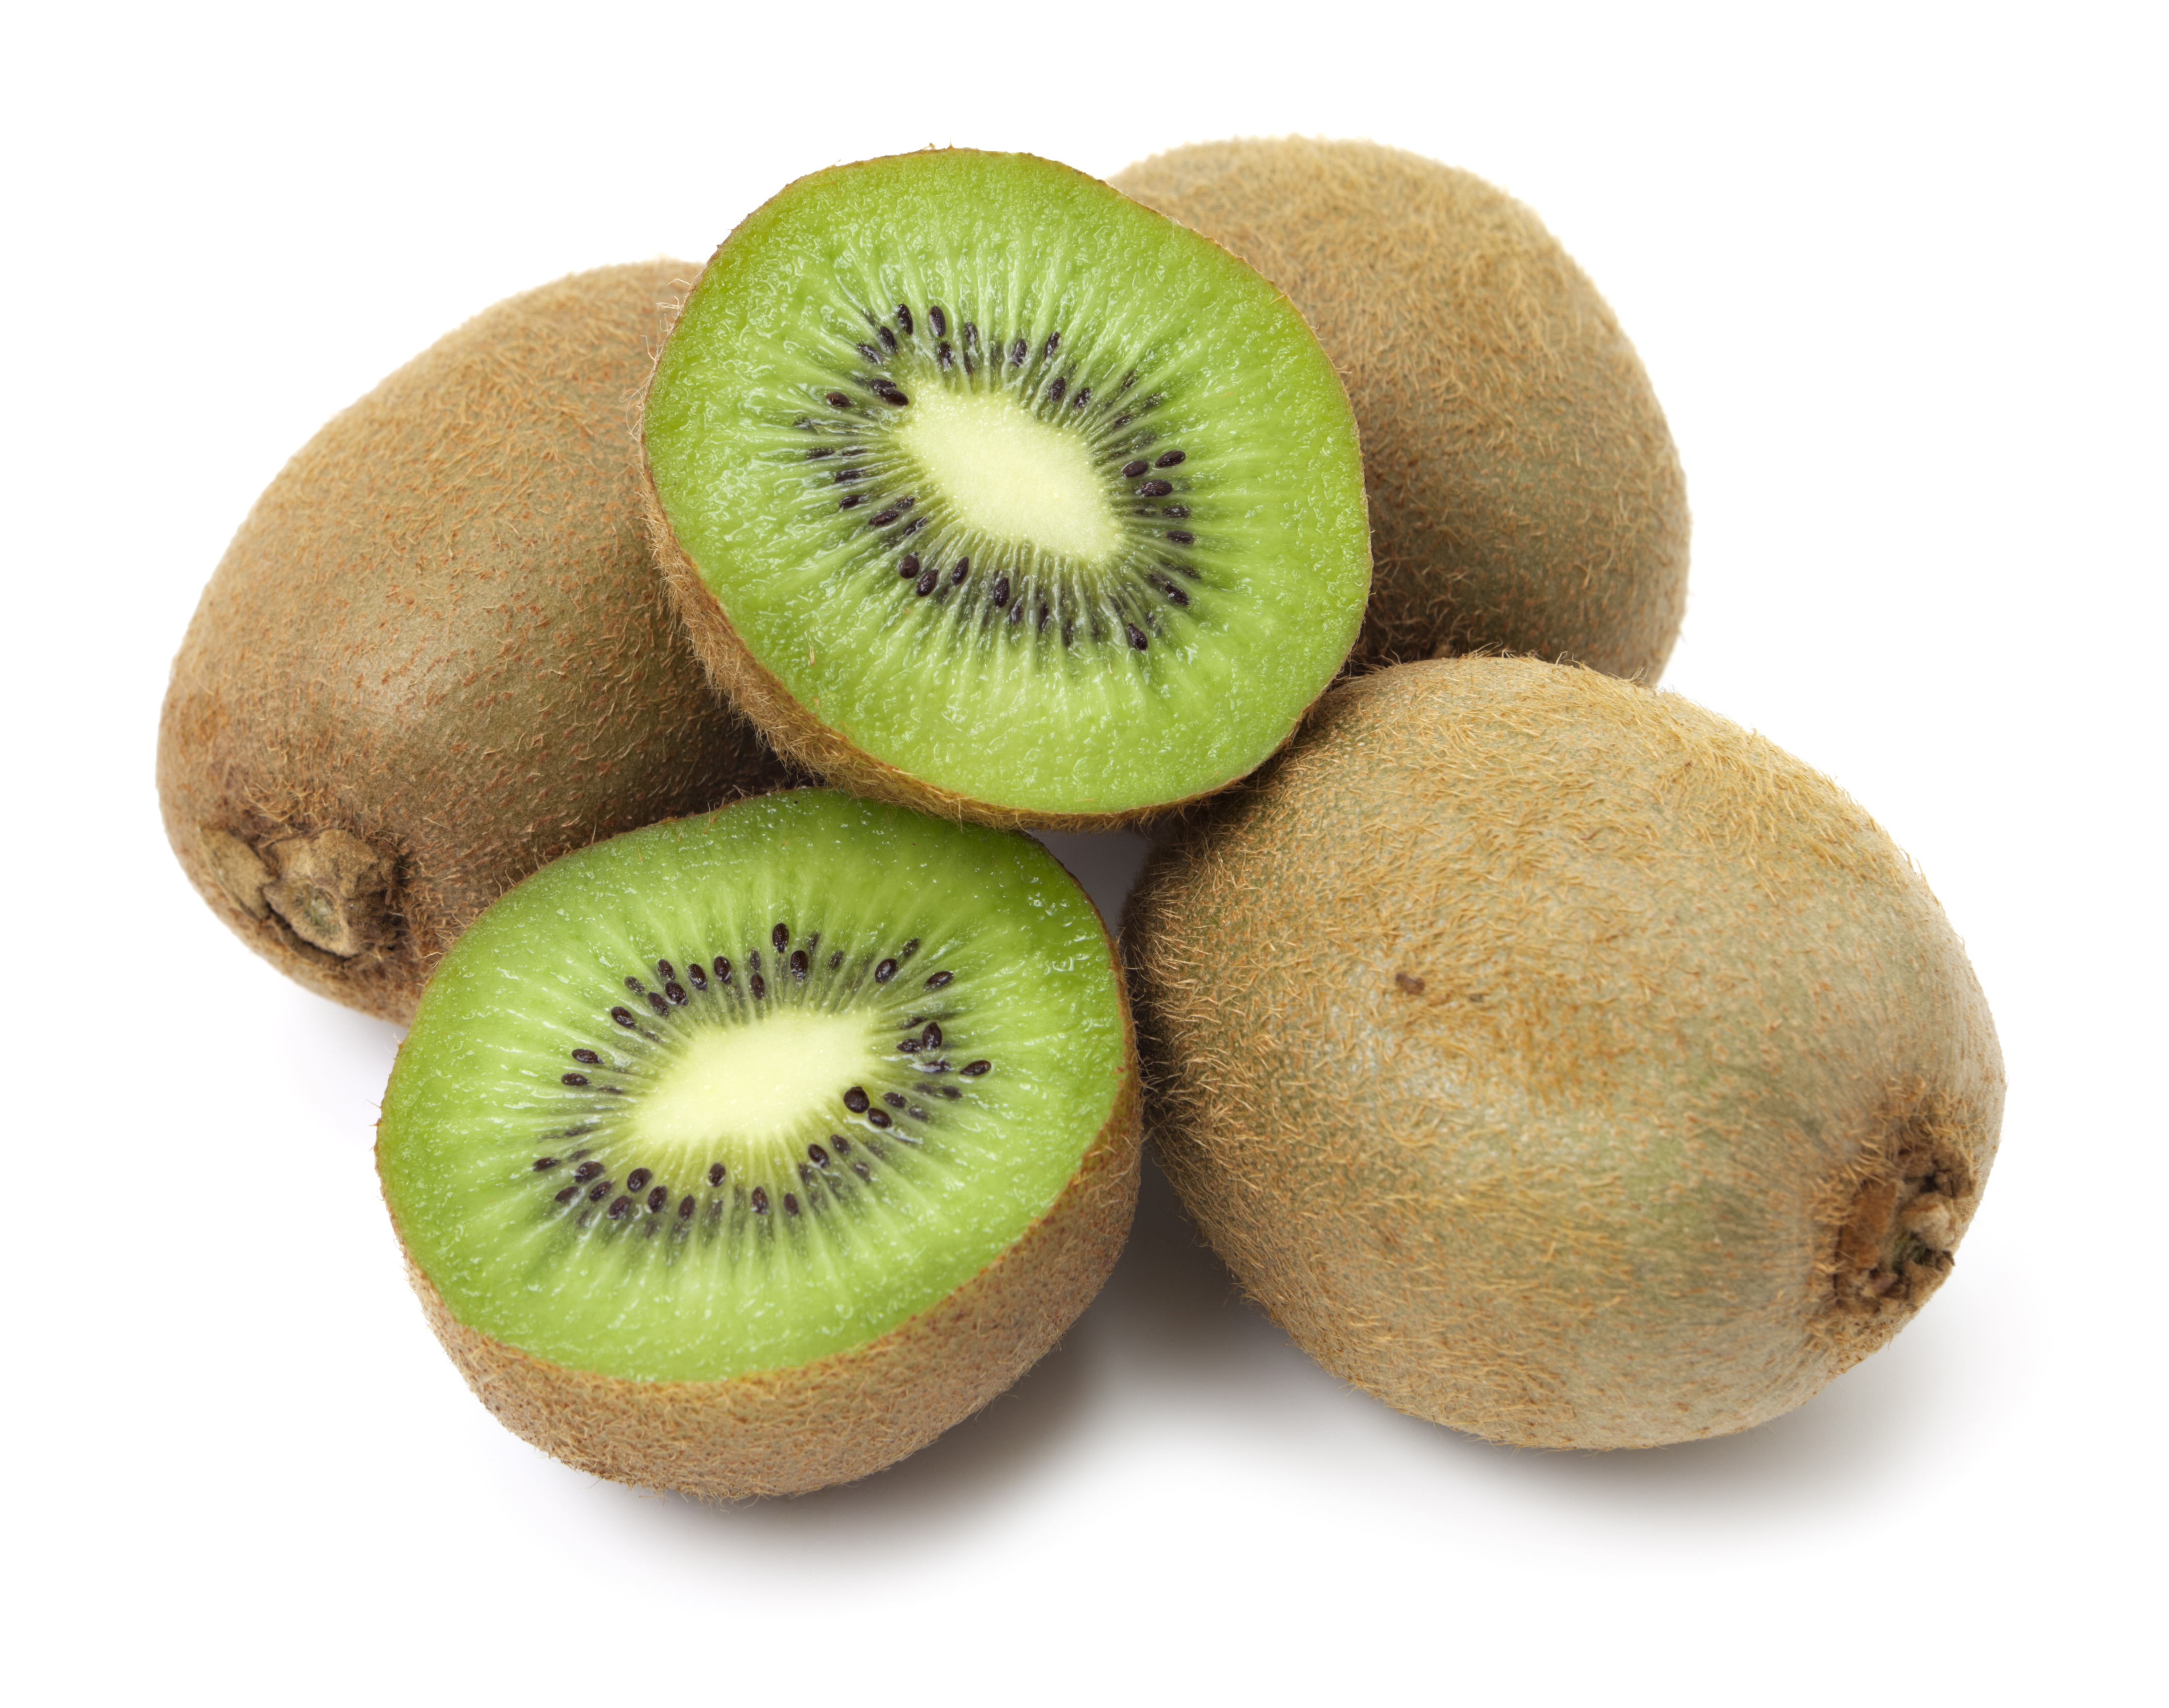 kiwi fruit benefits for periods